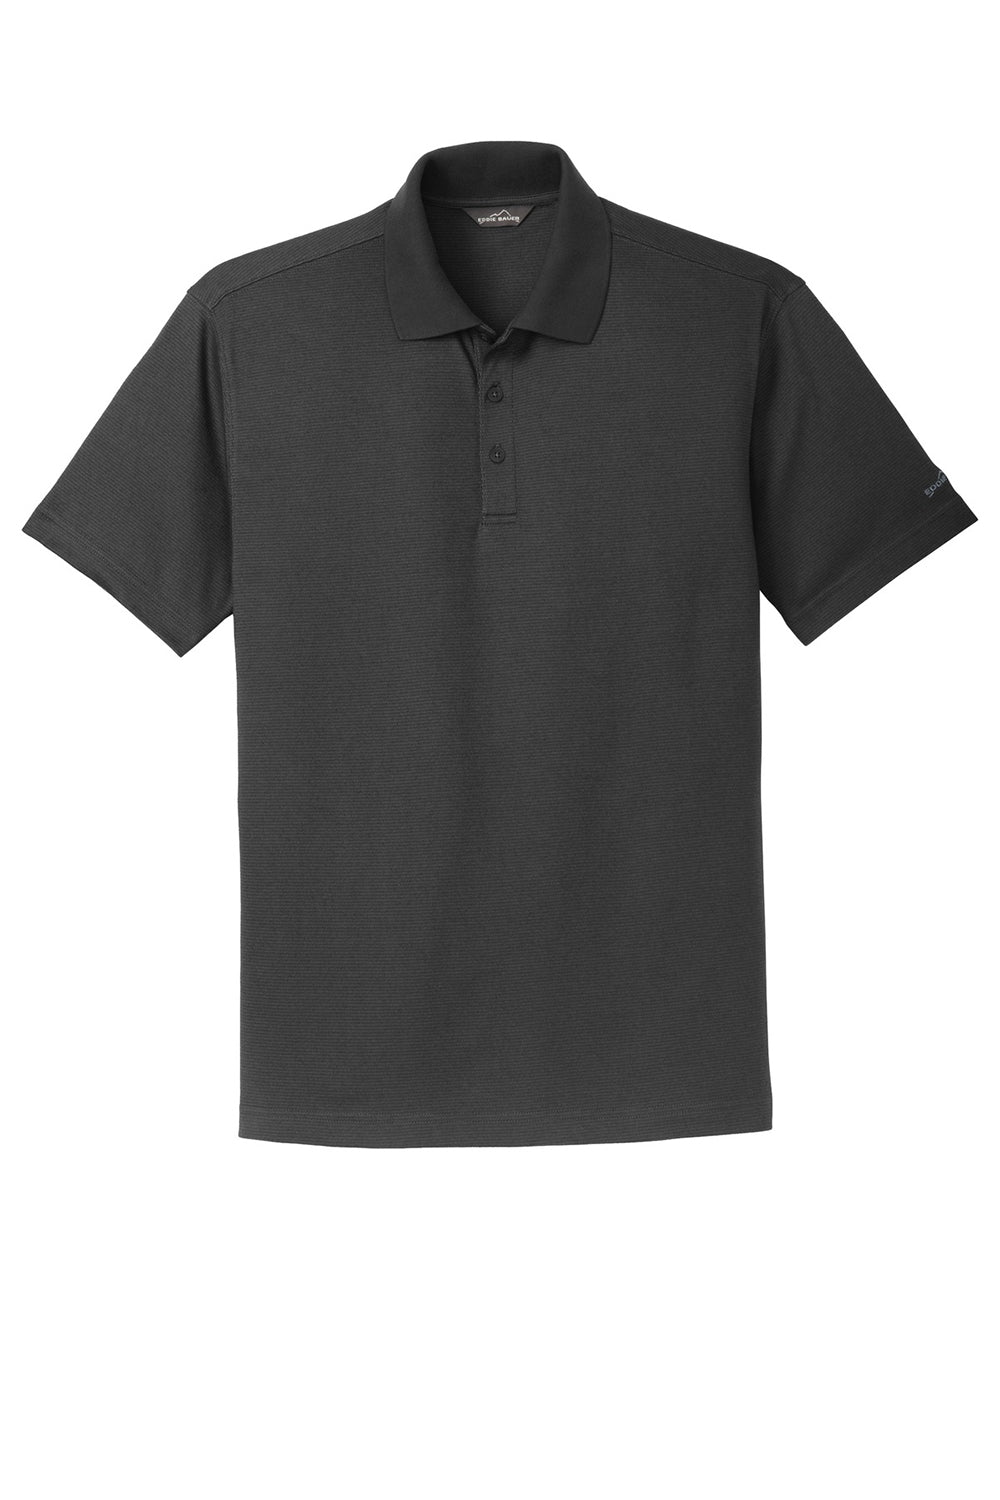 Eddie Bauer EB102 Mens Performance UV Protection Short Sleeve Polo Shirt Black Flat Front